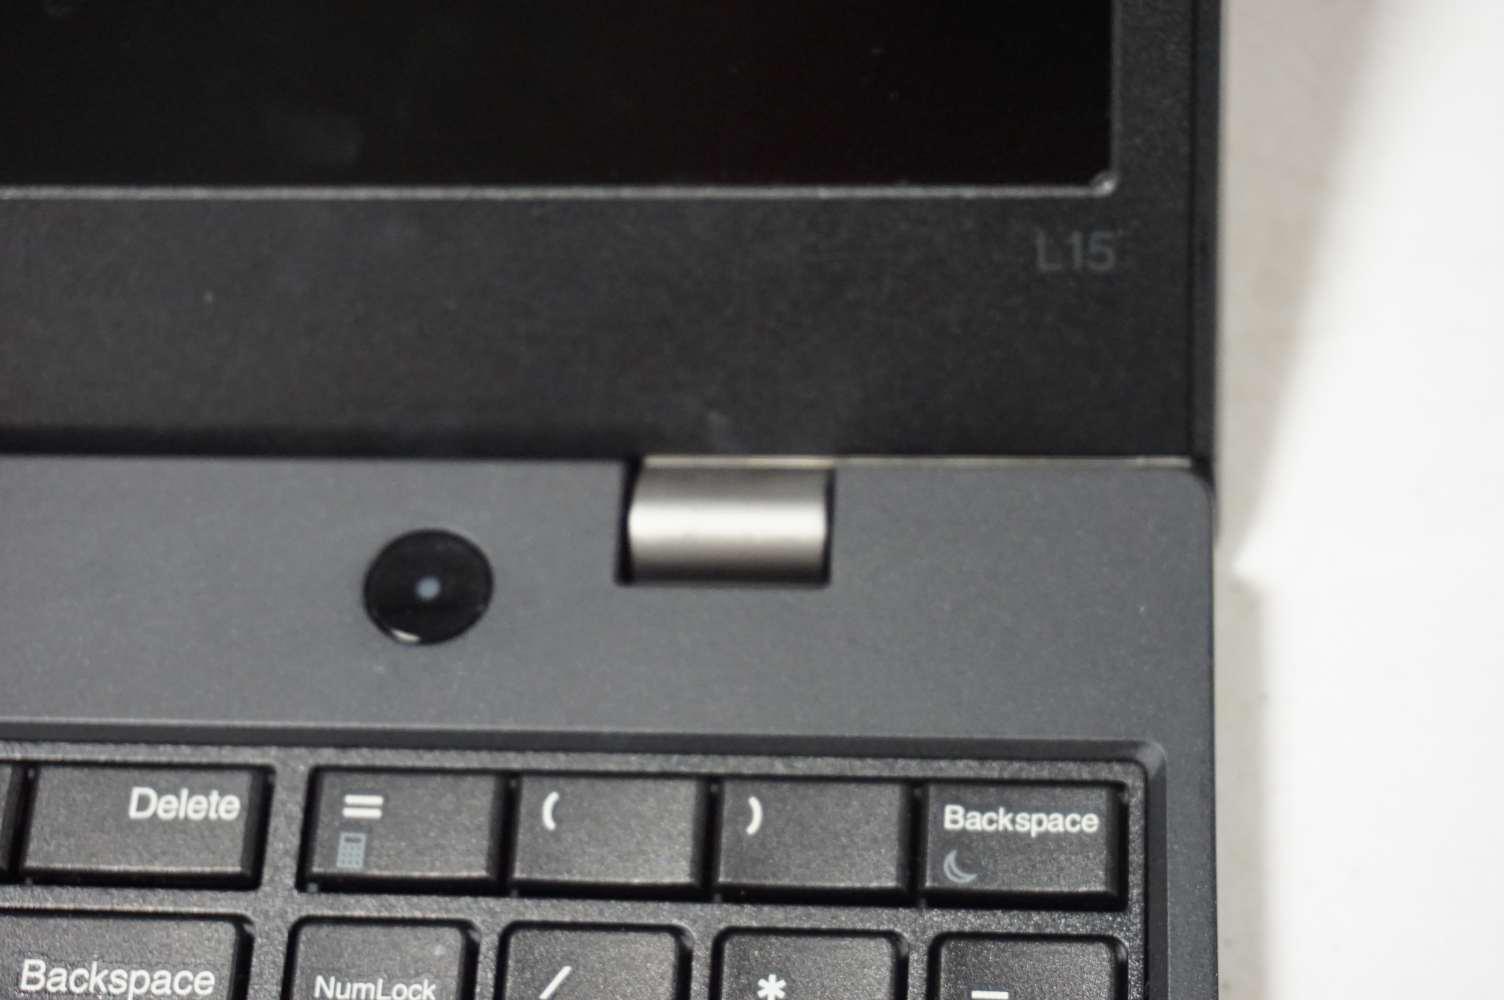 Lenovo ThinkPad L15 Intel i5 Laptop (Ser#PF2VLNTW)